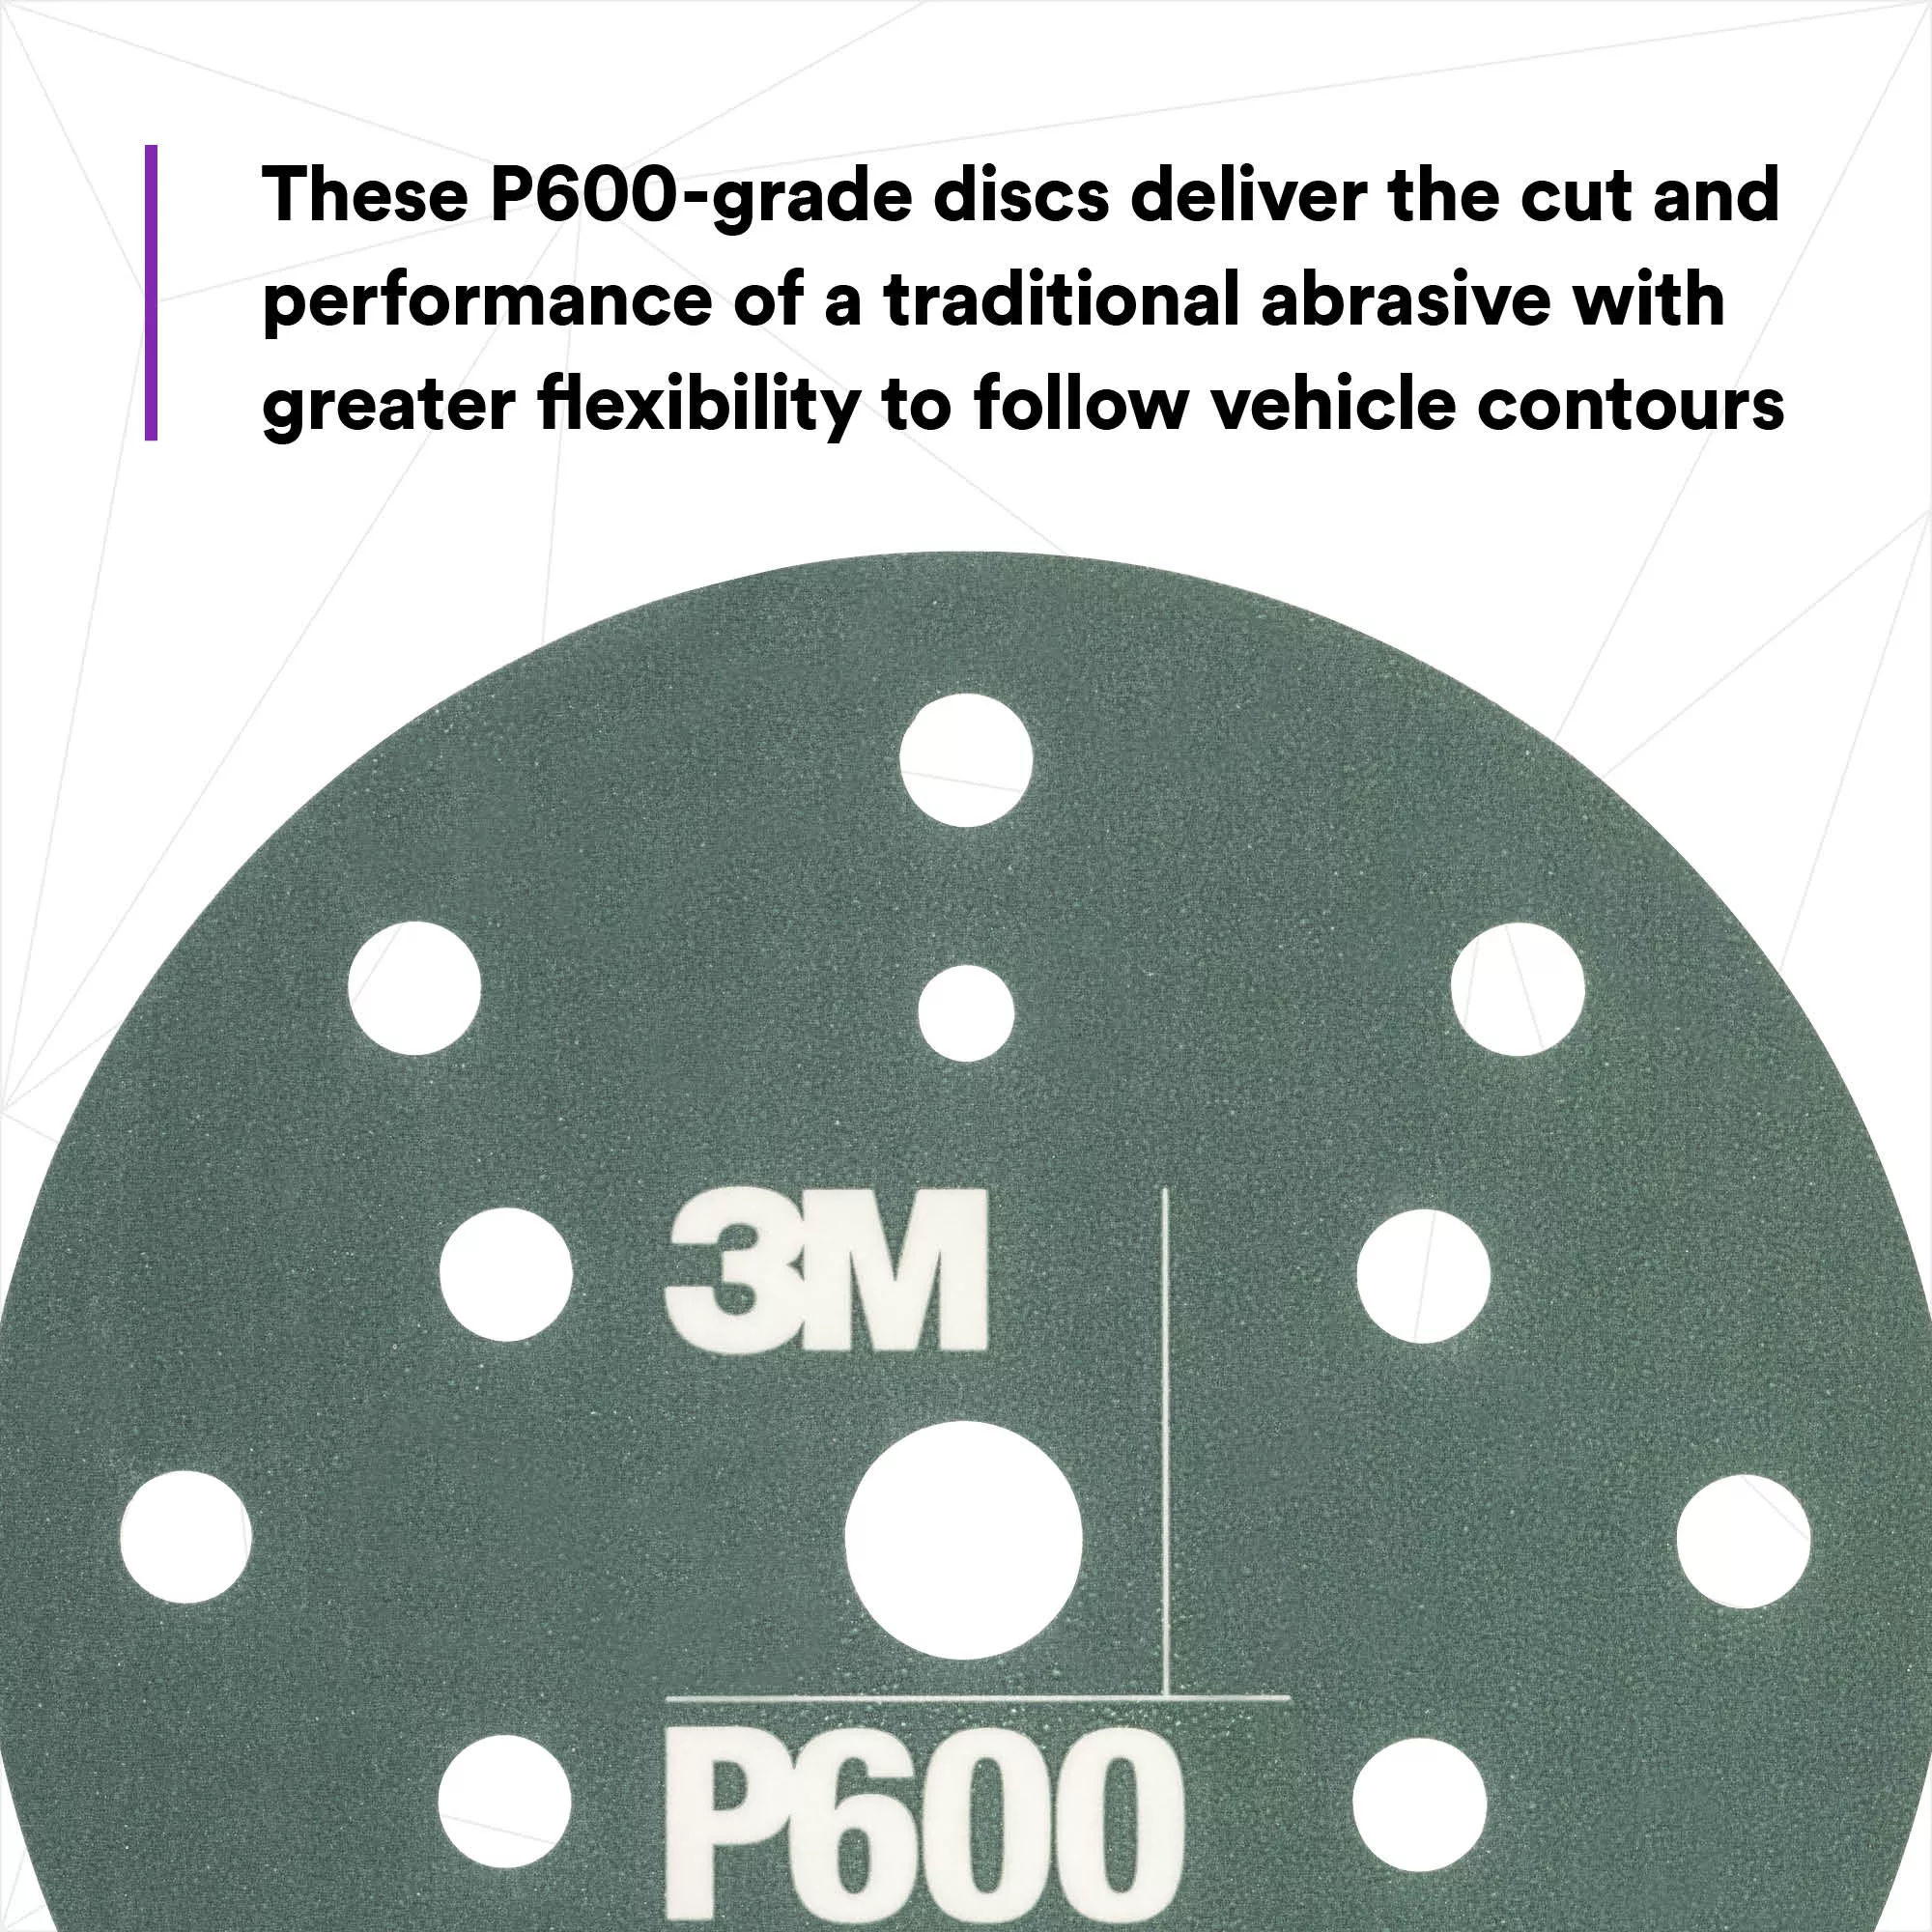 SKU 7000120194 | 3M™ Hookit™ Flexible Abrasive Disc 270J